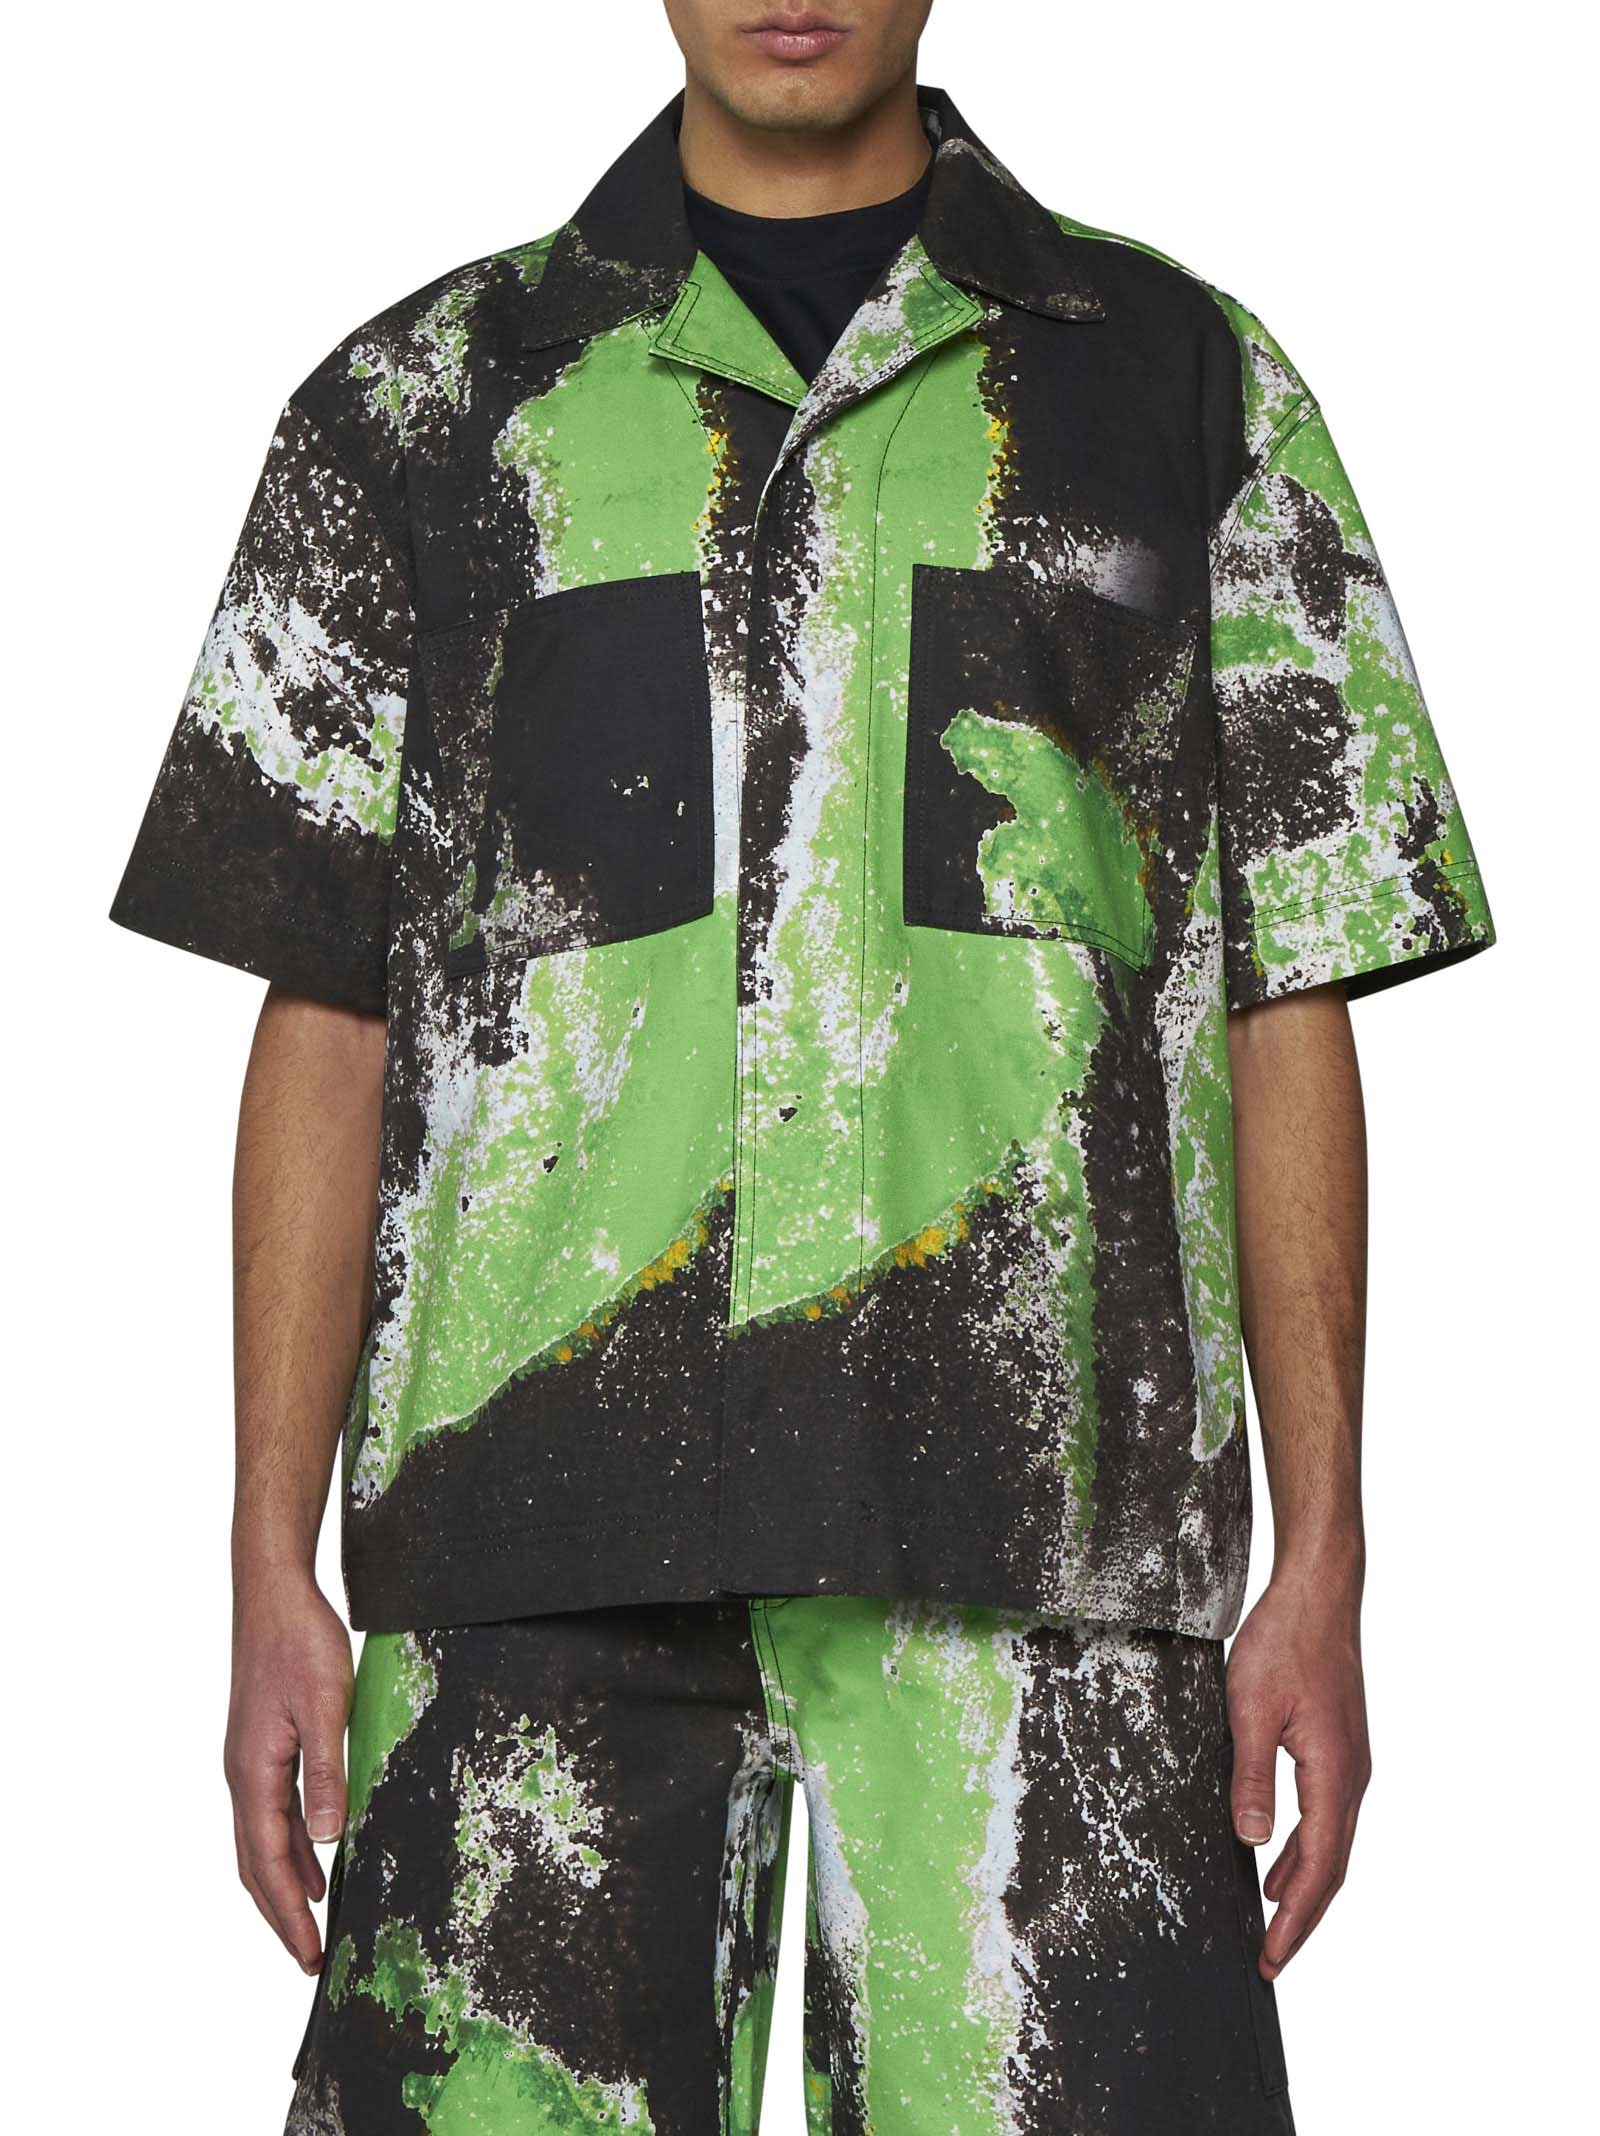 Shop 44 Label Group Shirt In Black+grunge Green